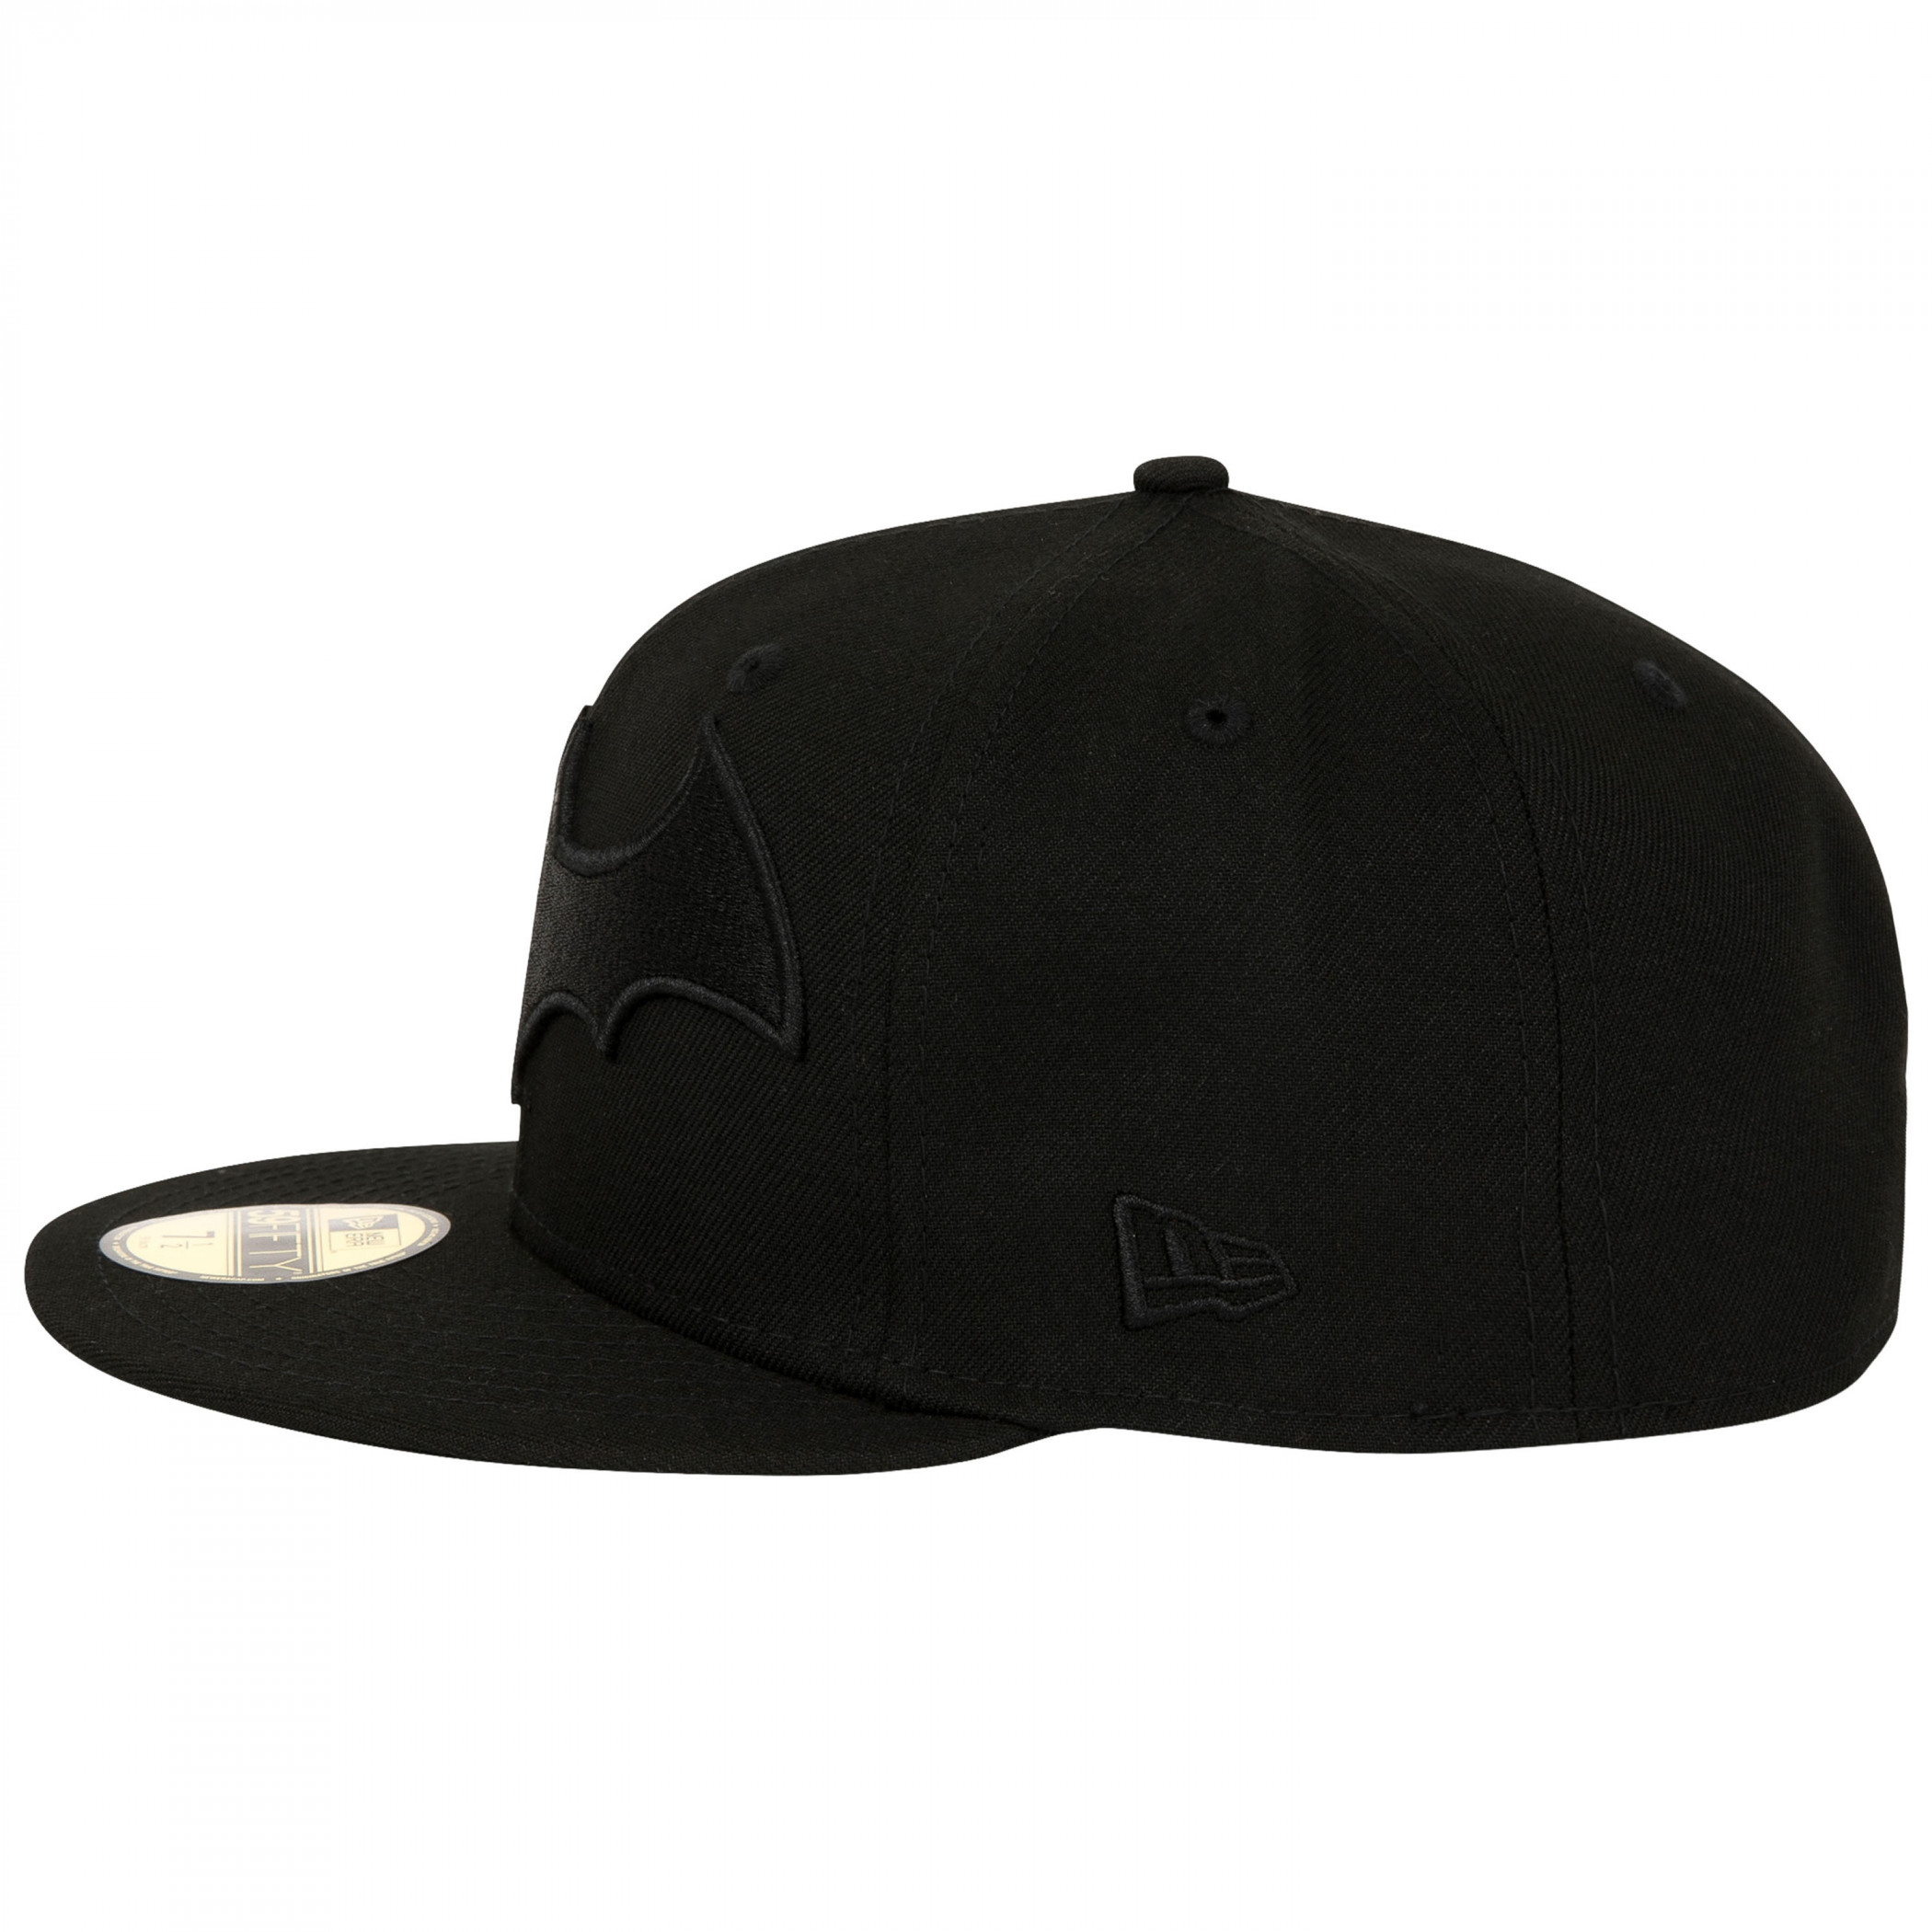 Batman Hush Logo Black on Black Colorway New Era 59Fifty Fitted Hat